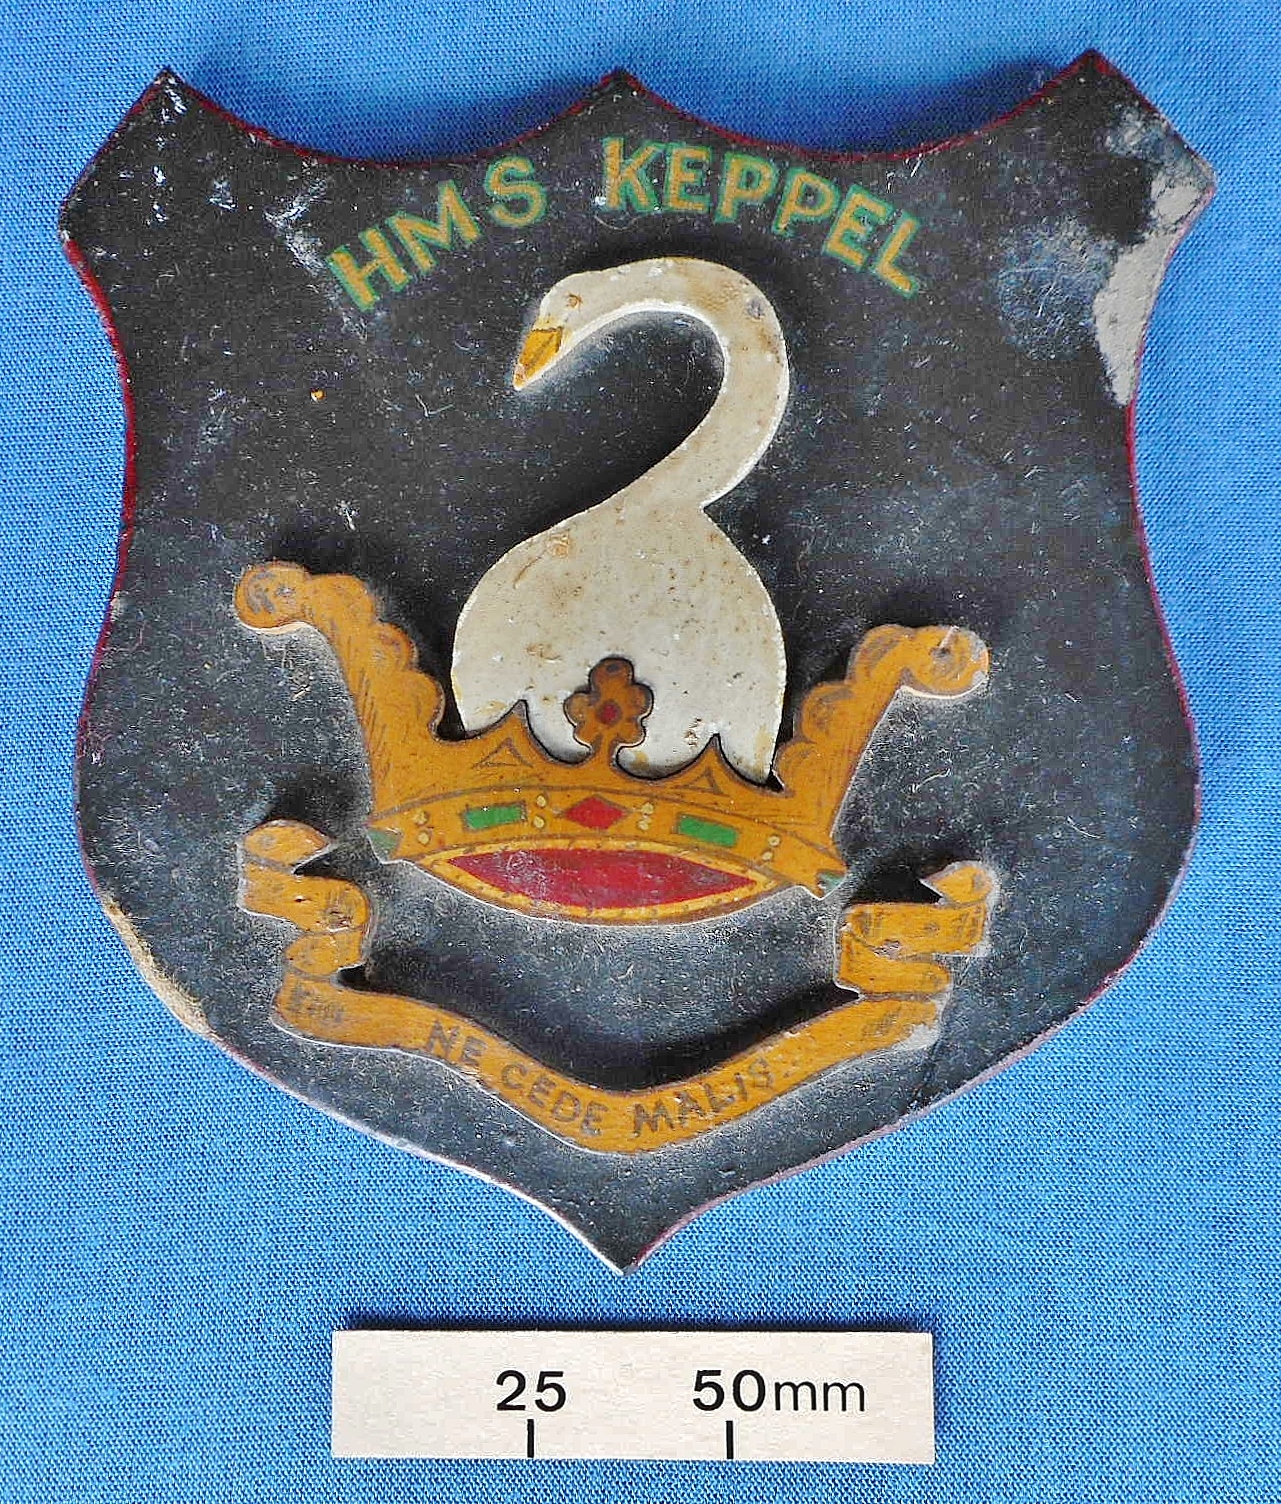 HMS Keppel crest